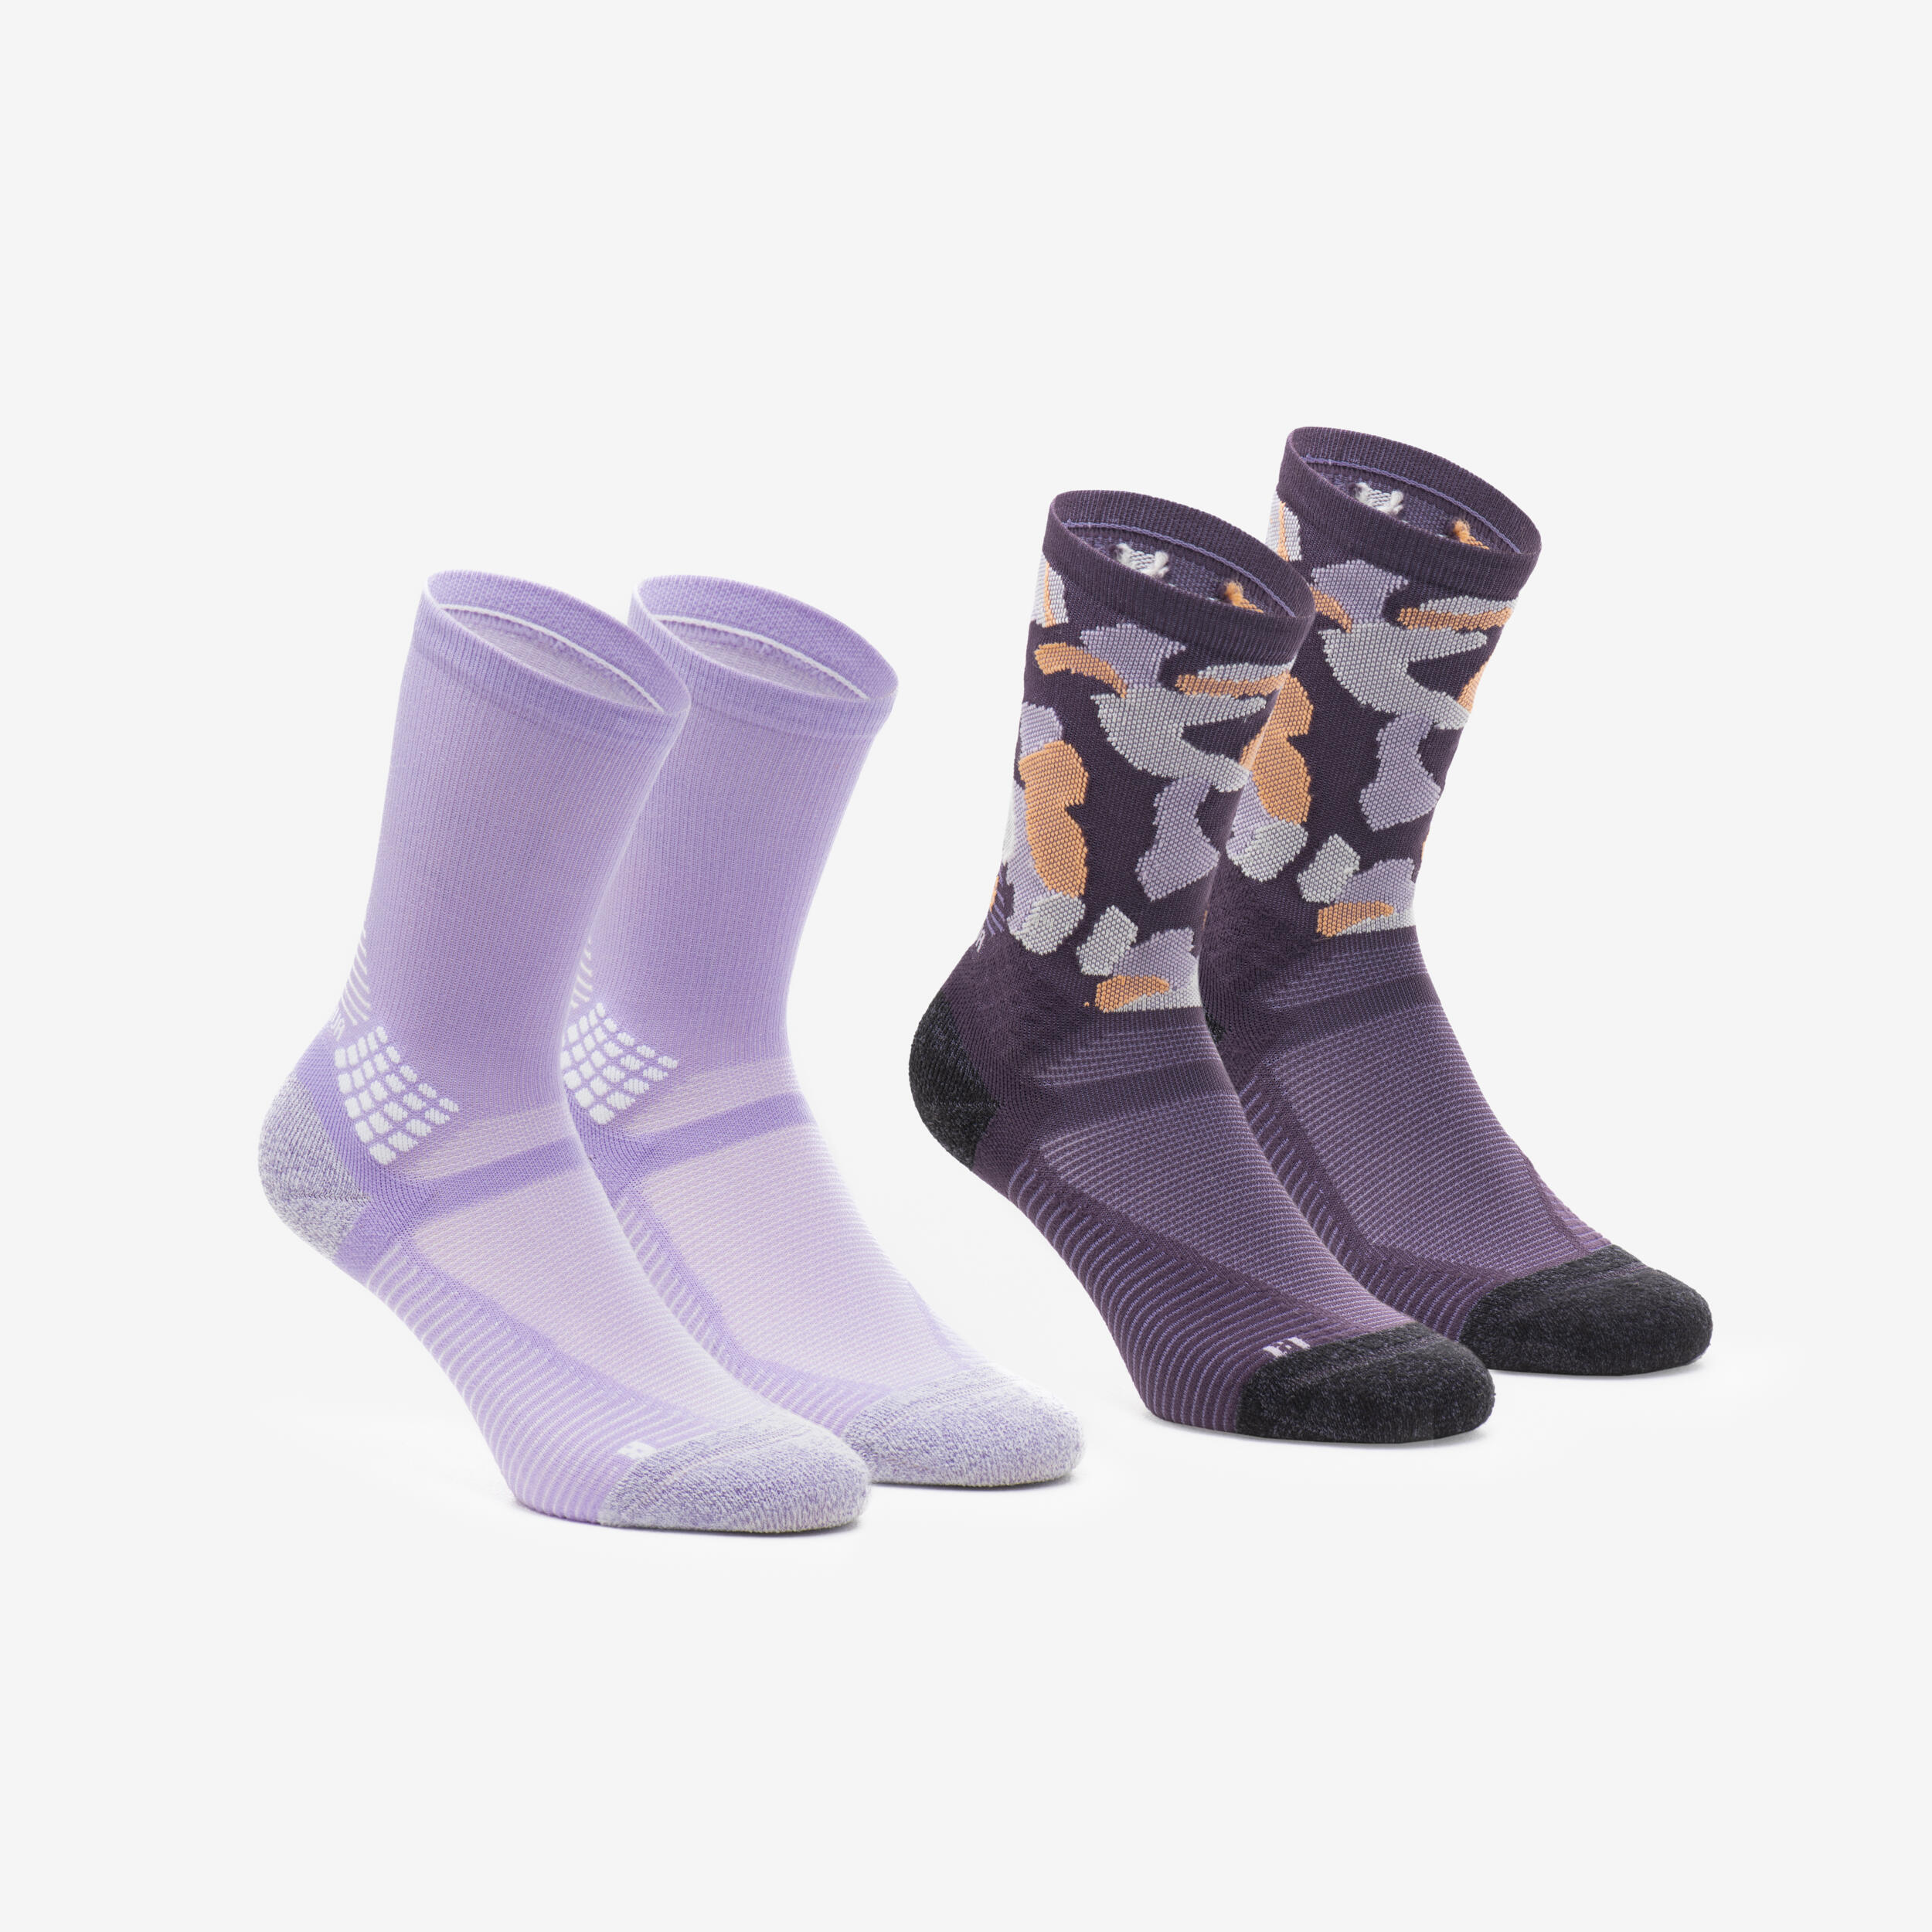 QUECHUA Hiking Socks Hike 500 High Trendy x2 Pairs - Purple & Kamo